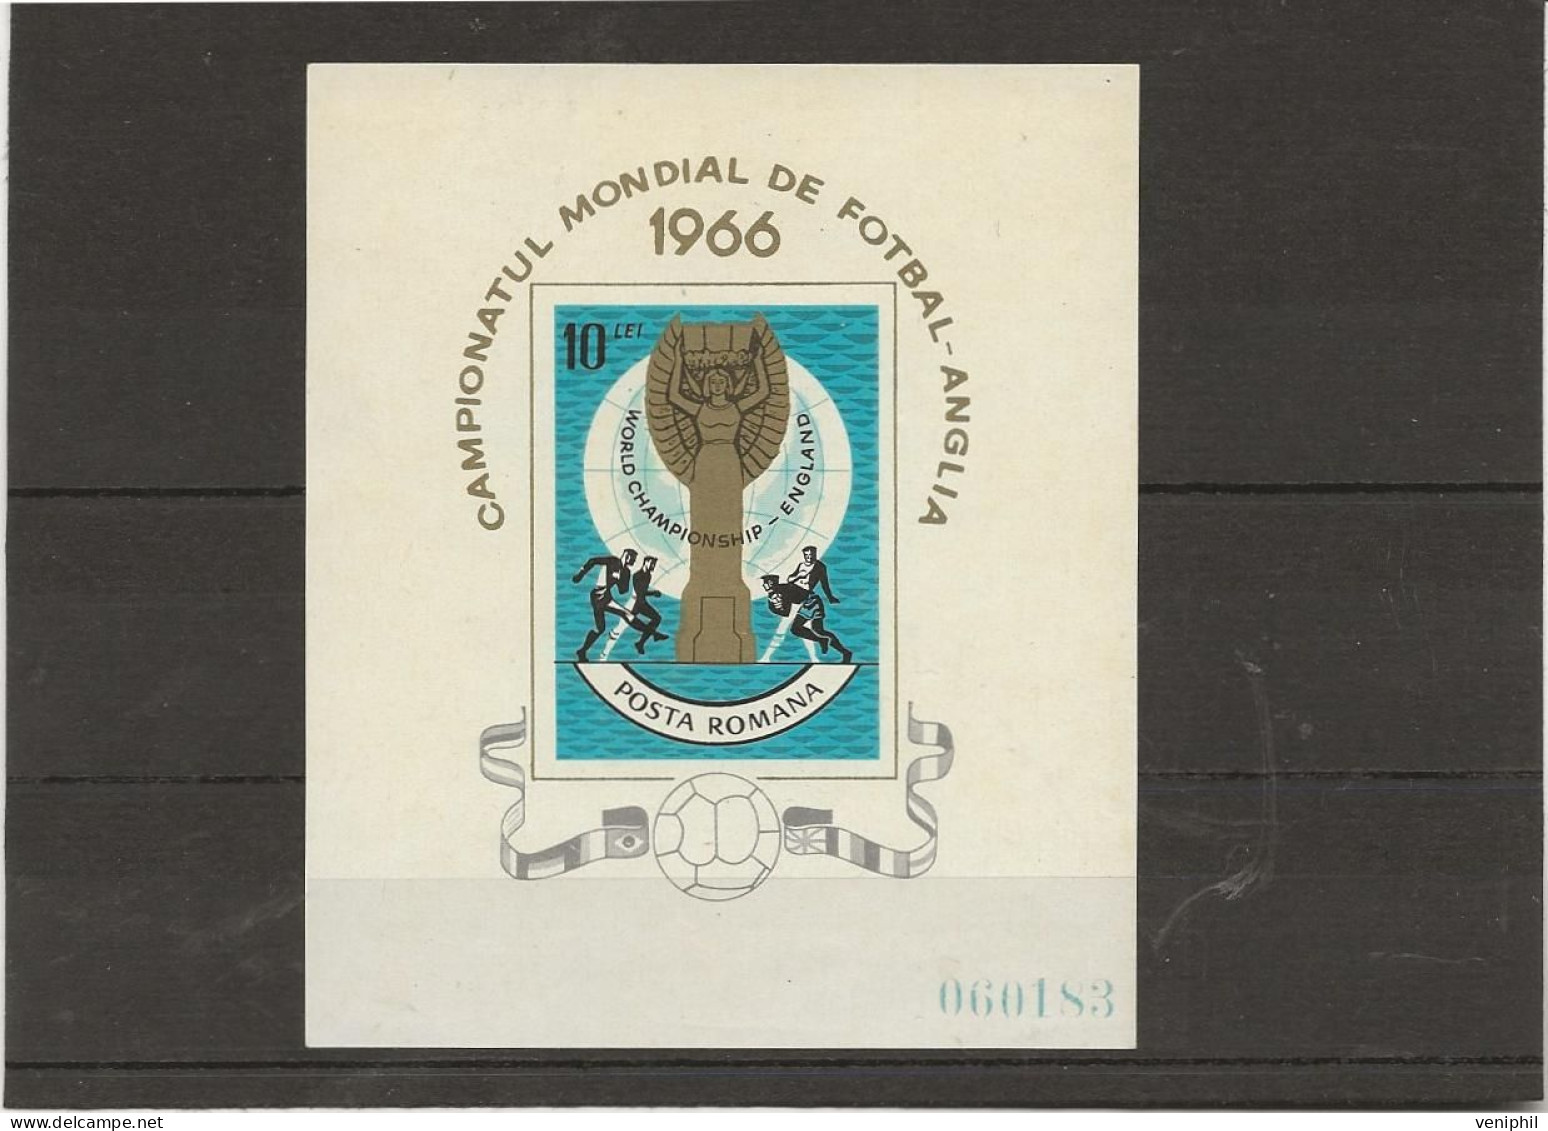 ROUMANIE - BLOC FEUILLET N° 62  - NEUF SANS CHARNIERE - ANNEE 1966 - Blocks & Sheetlets